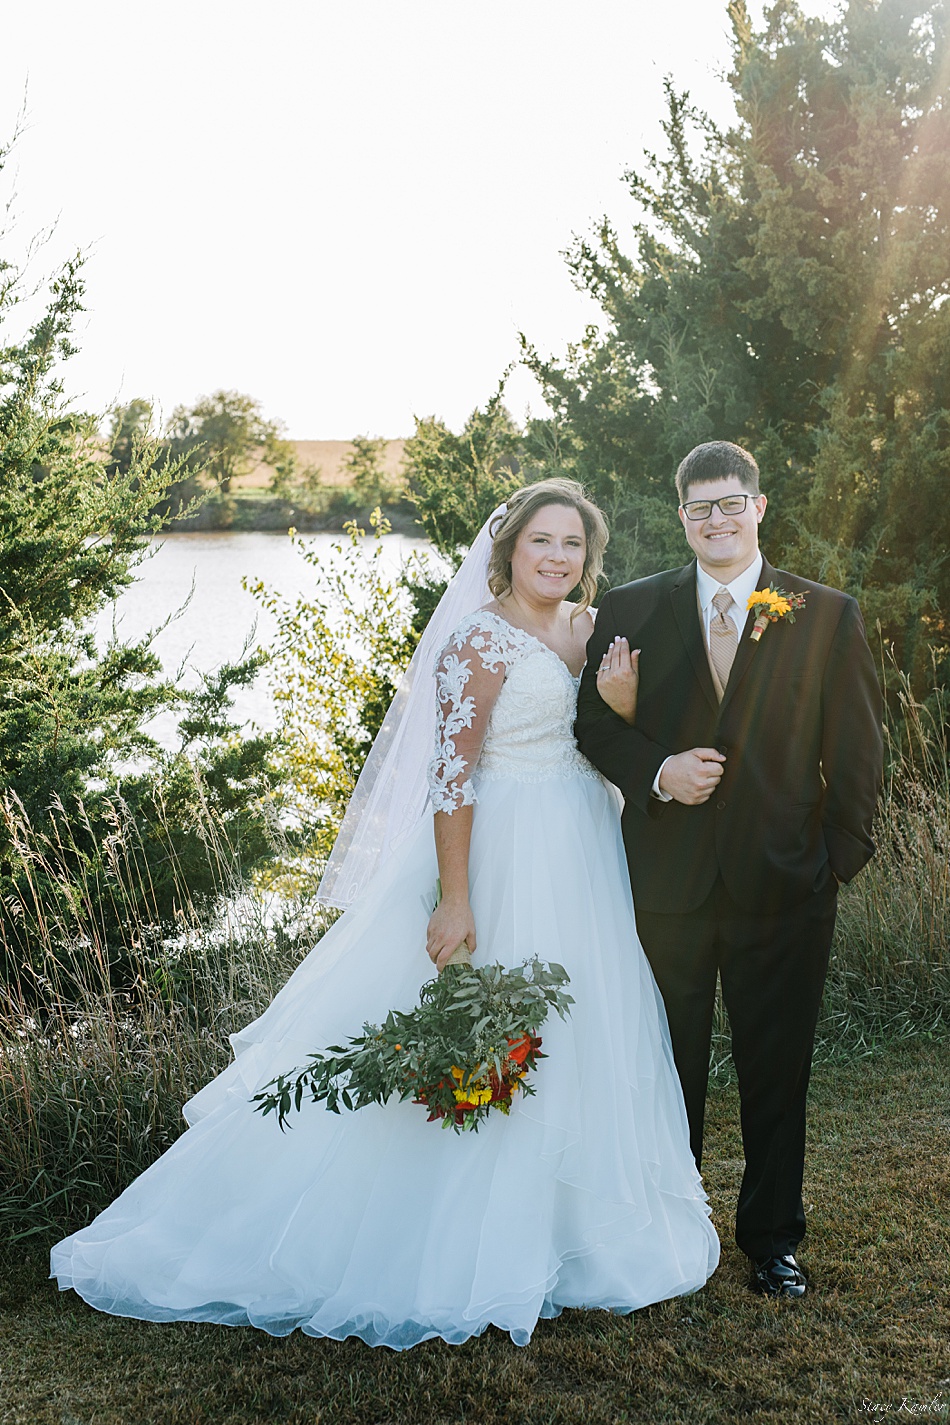 Sun Flare on Wedding Photos in October